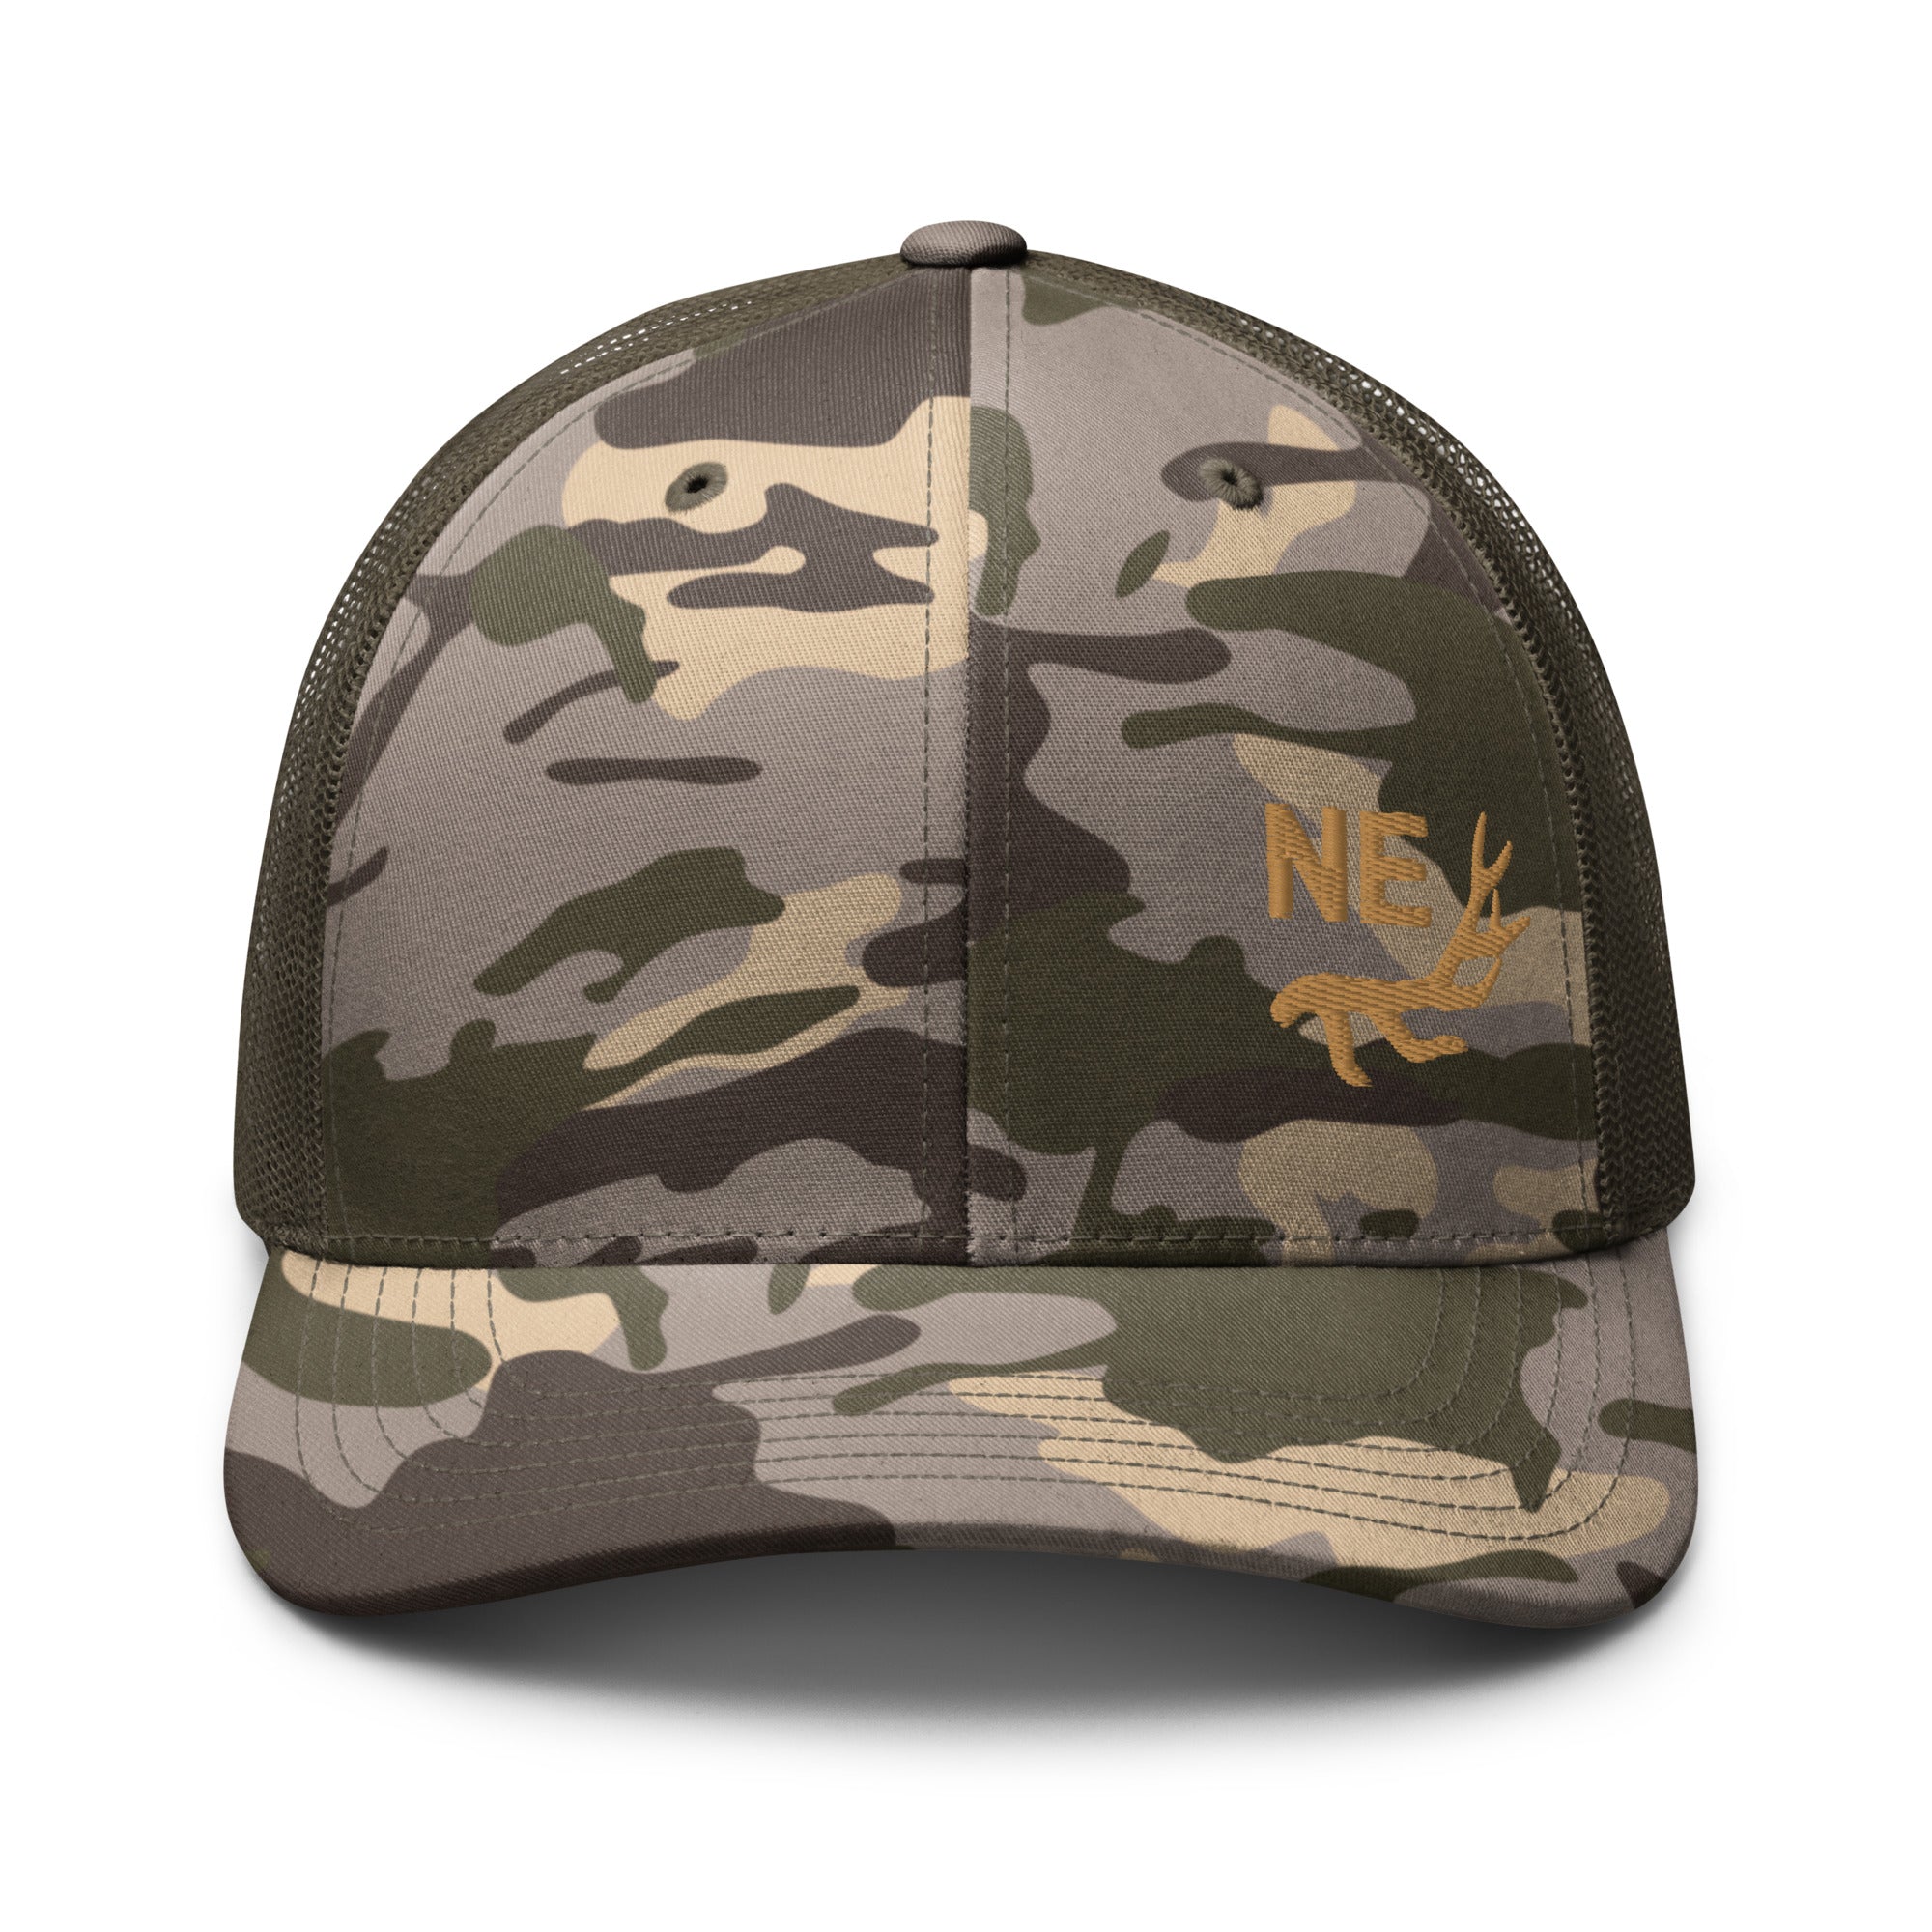 camouflage-trucker-hat-camo-olive-front-655e6264abdf4.jpg